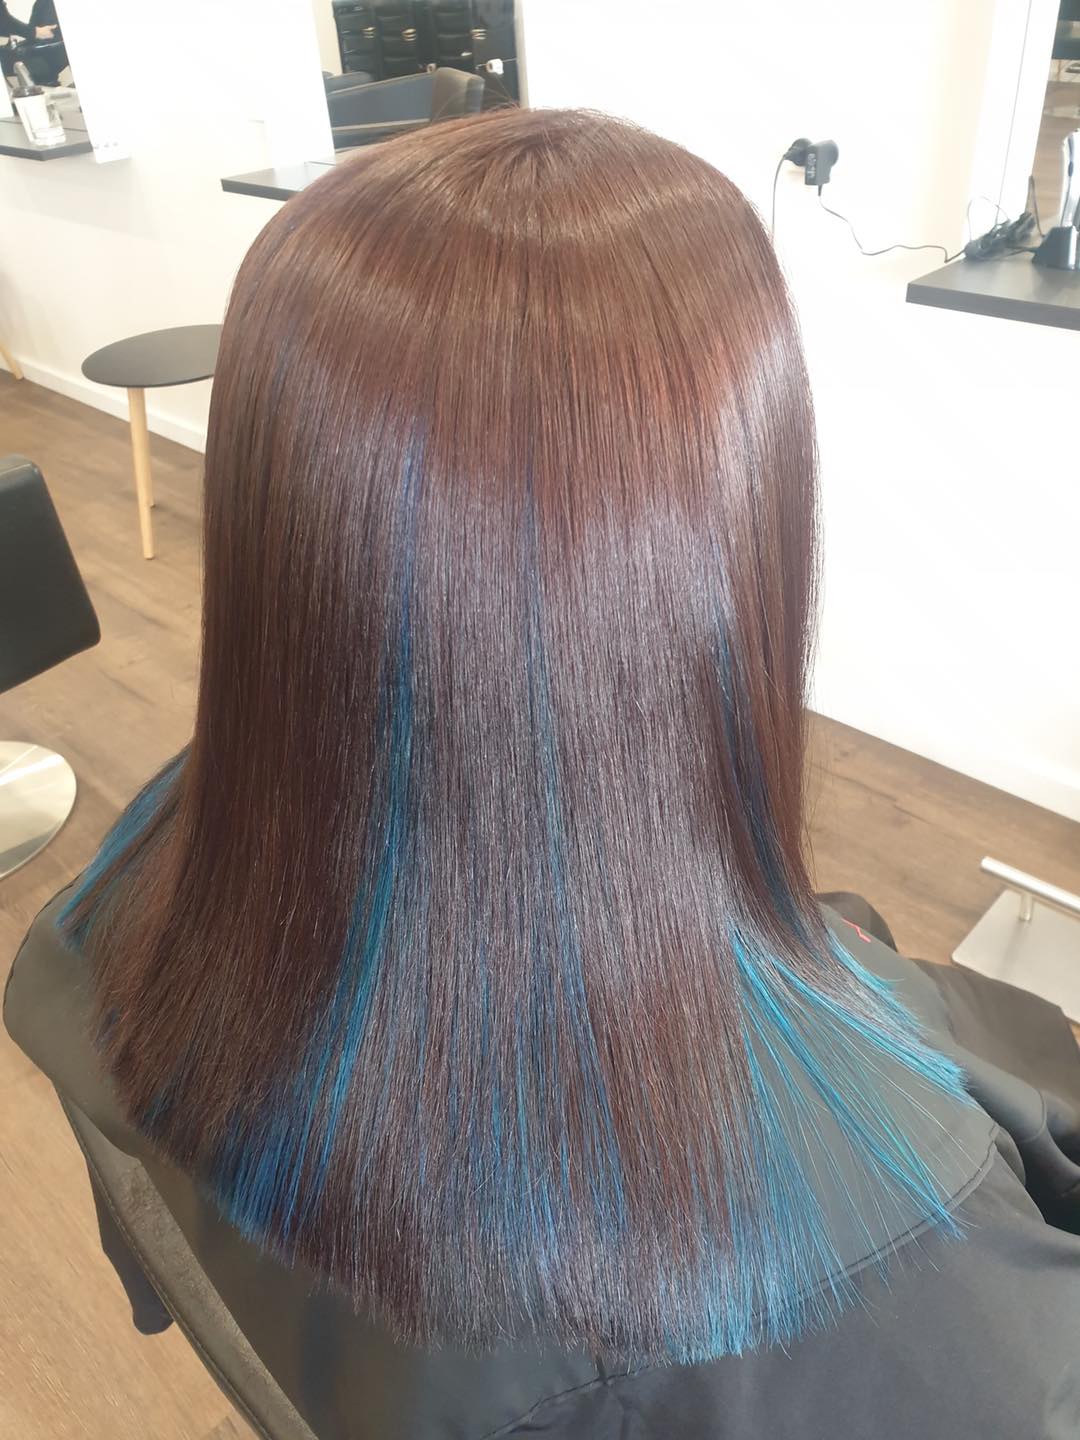 Brown Hair With Blue Streaks - Hair Salon in Vincentia, NSW